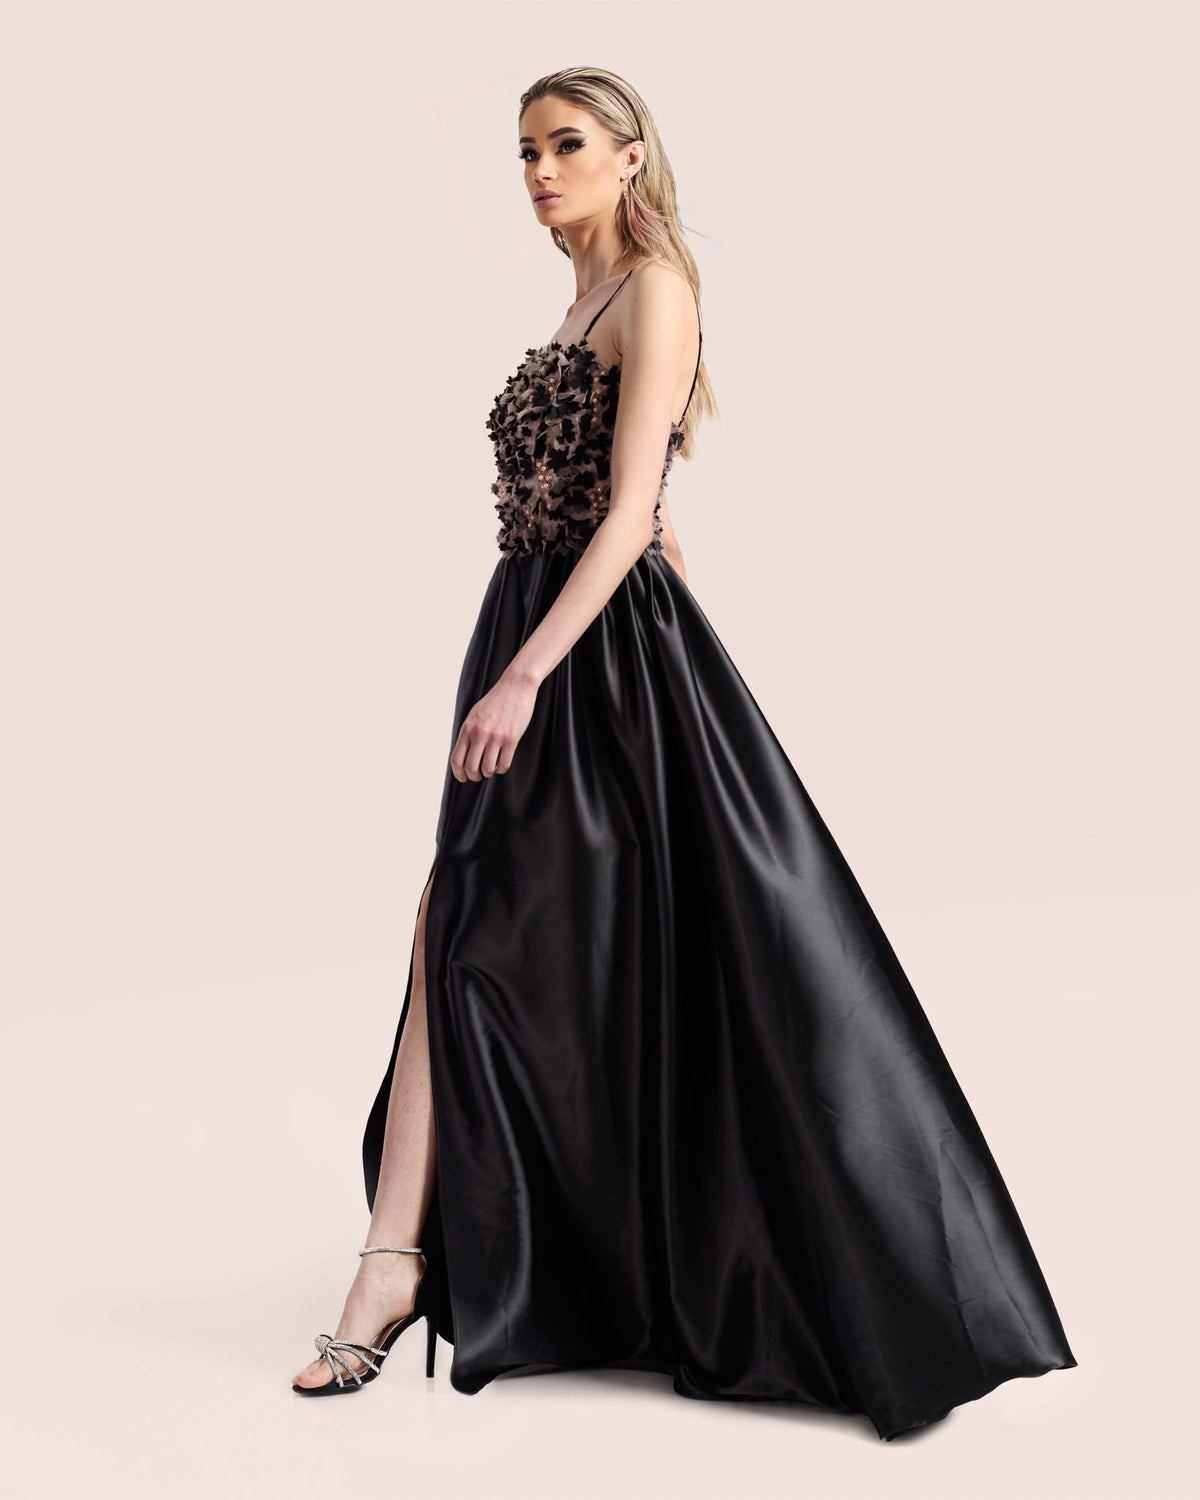 Elegance gown